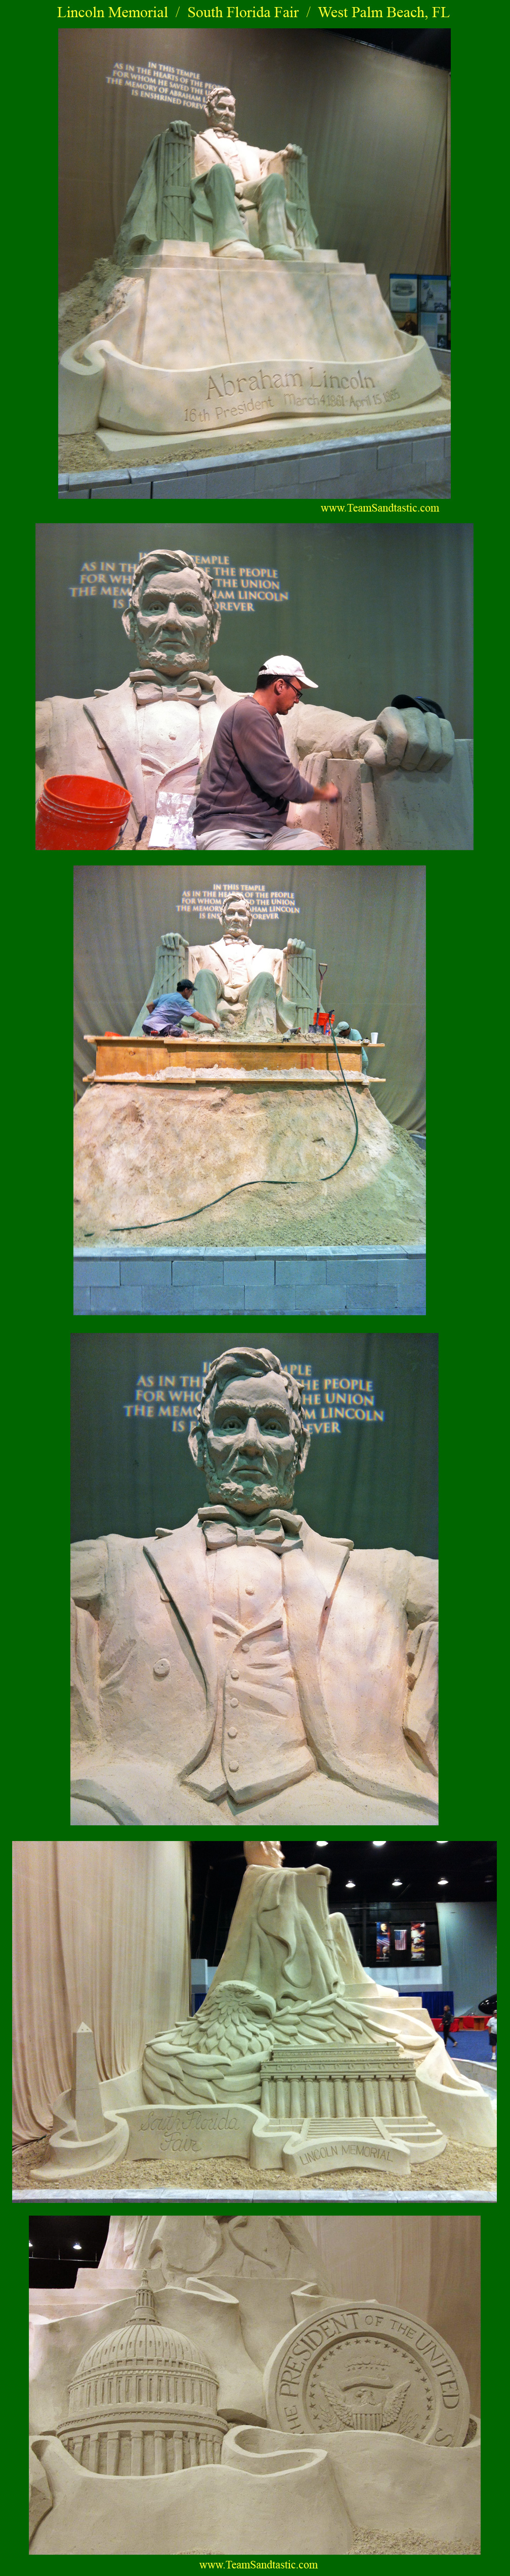 Lincoln Memorial Sand Sculpture